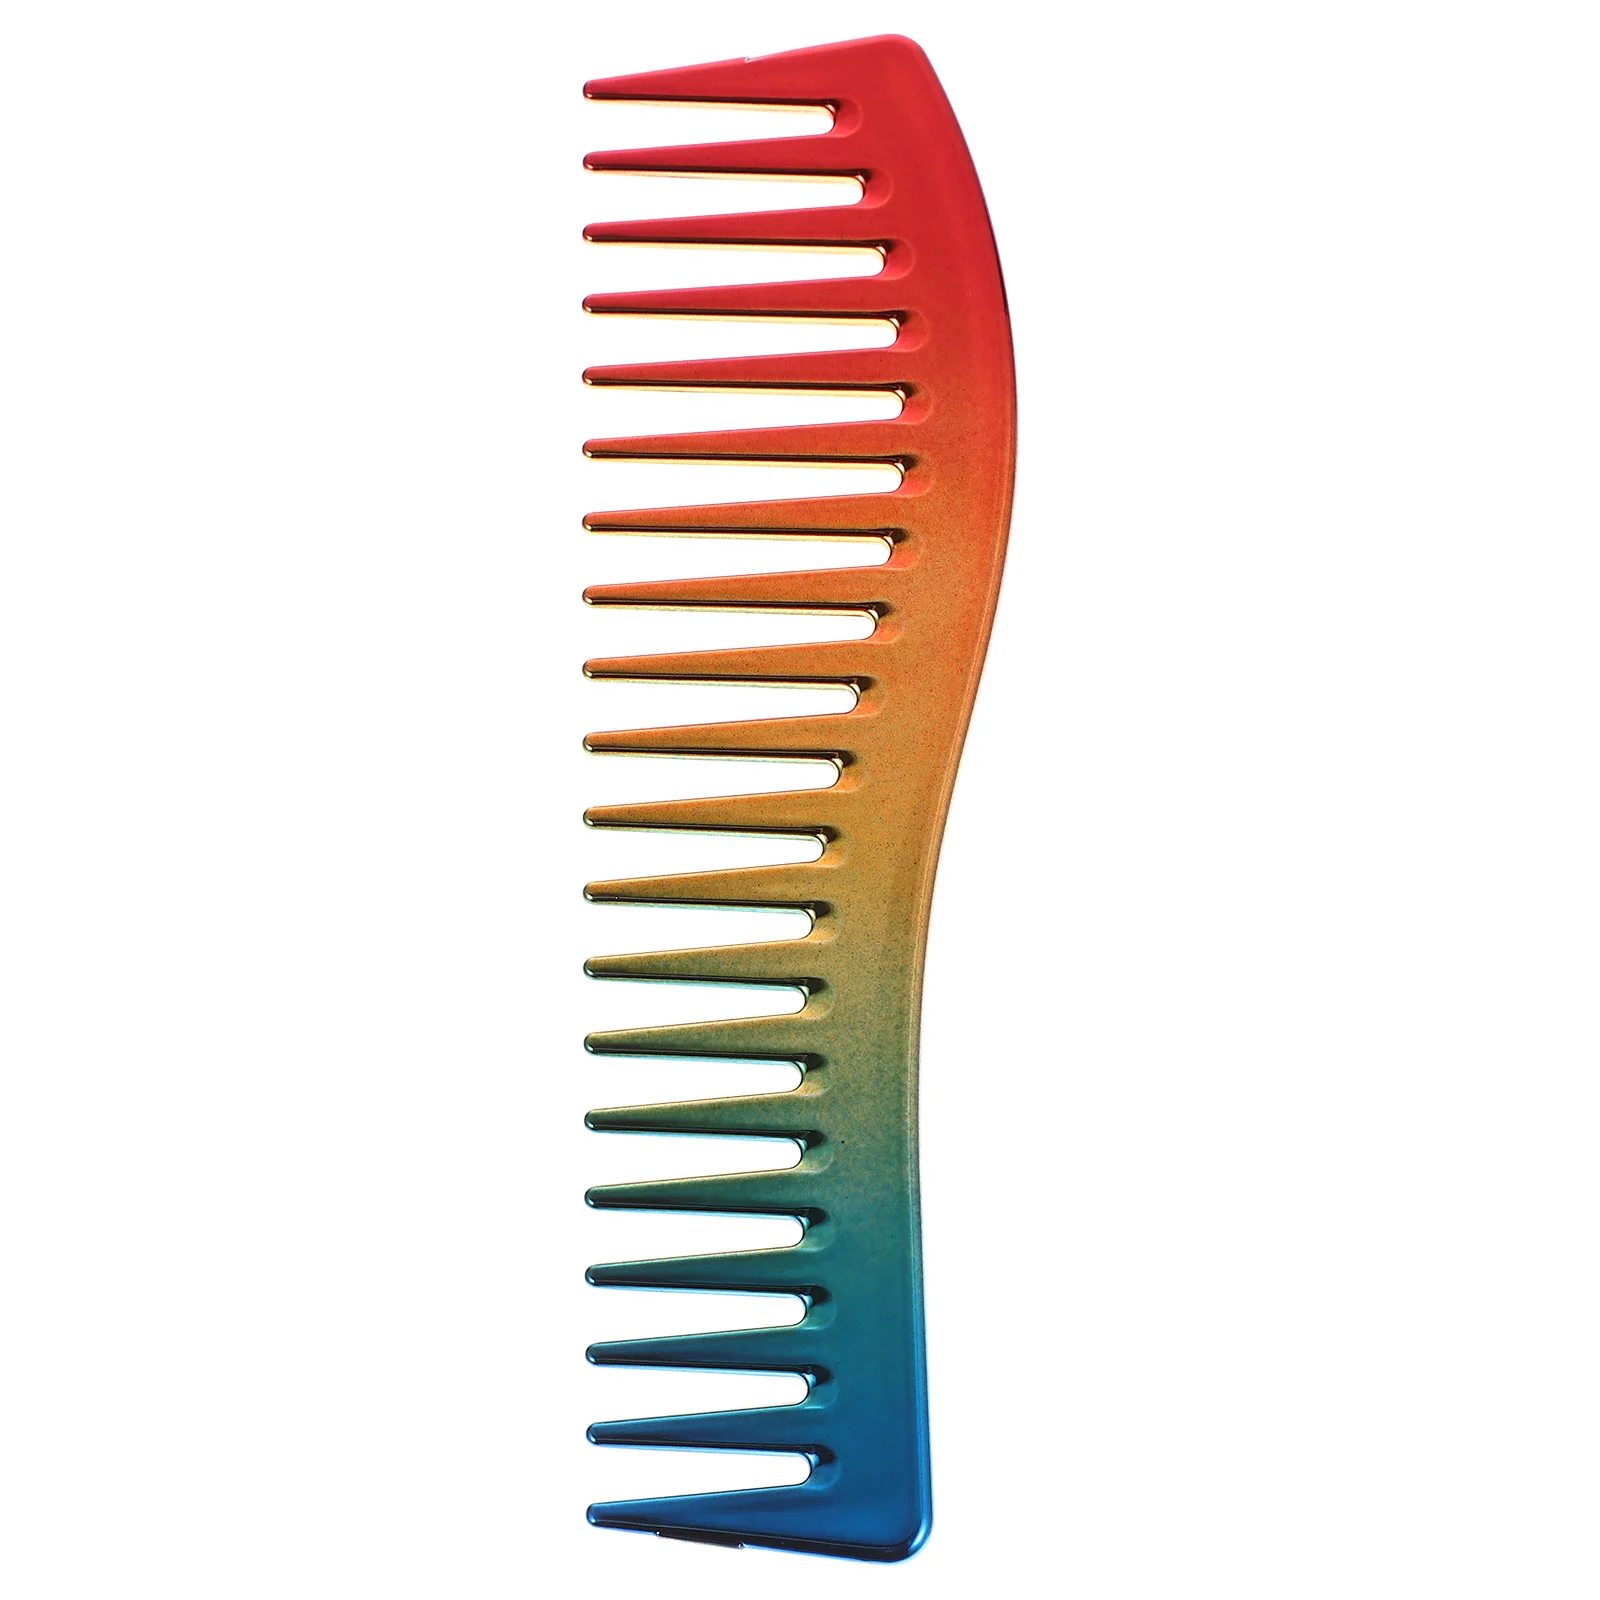 

Comb Hair Combs Wide Detangling Styling Tooth Detangler Barber Salon Men Hairdressing Teeth Mens Women Shaping Curly Hairbrush